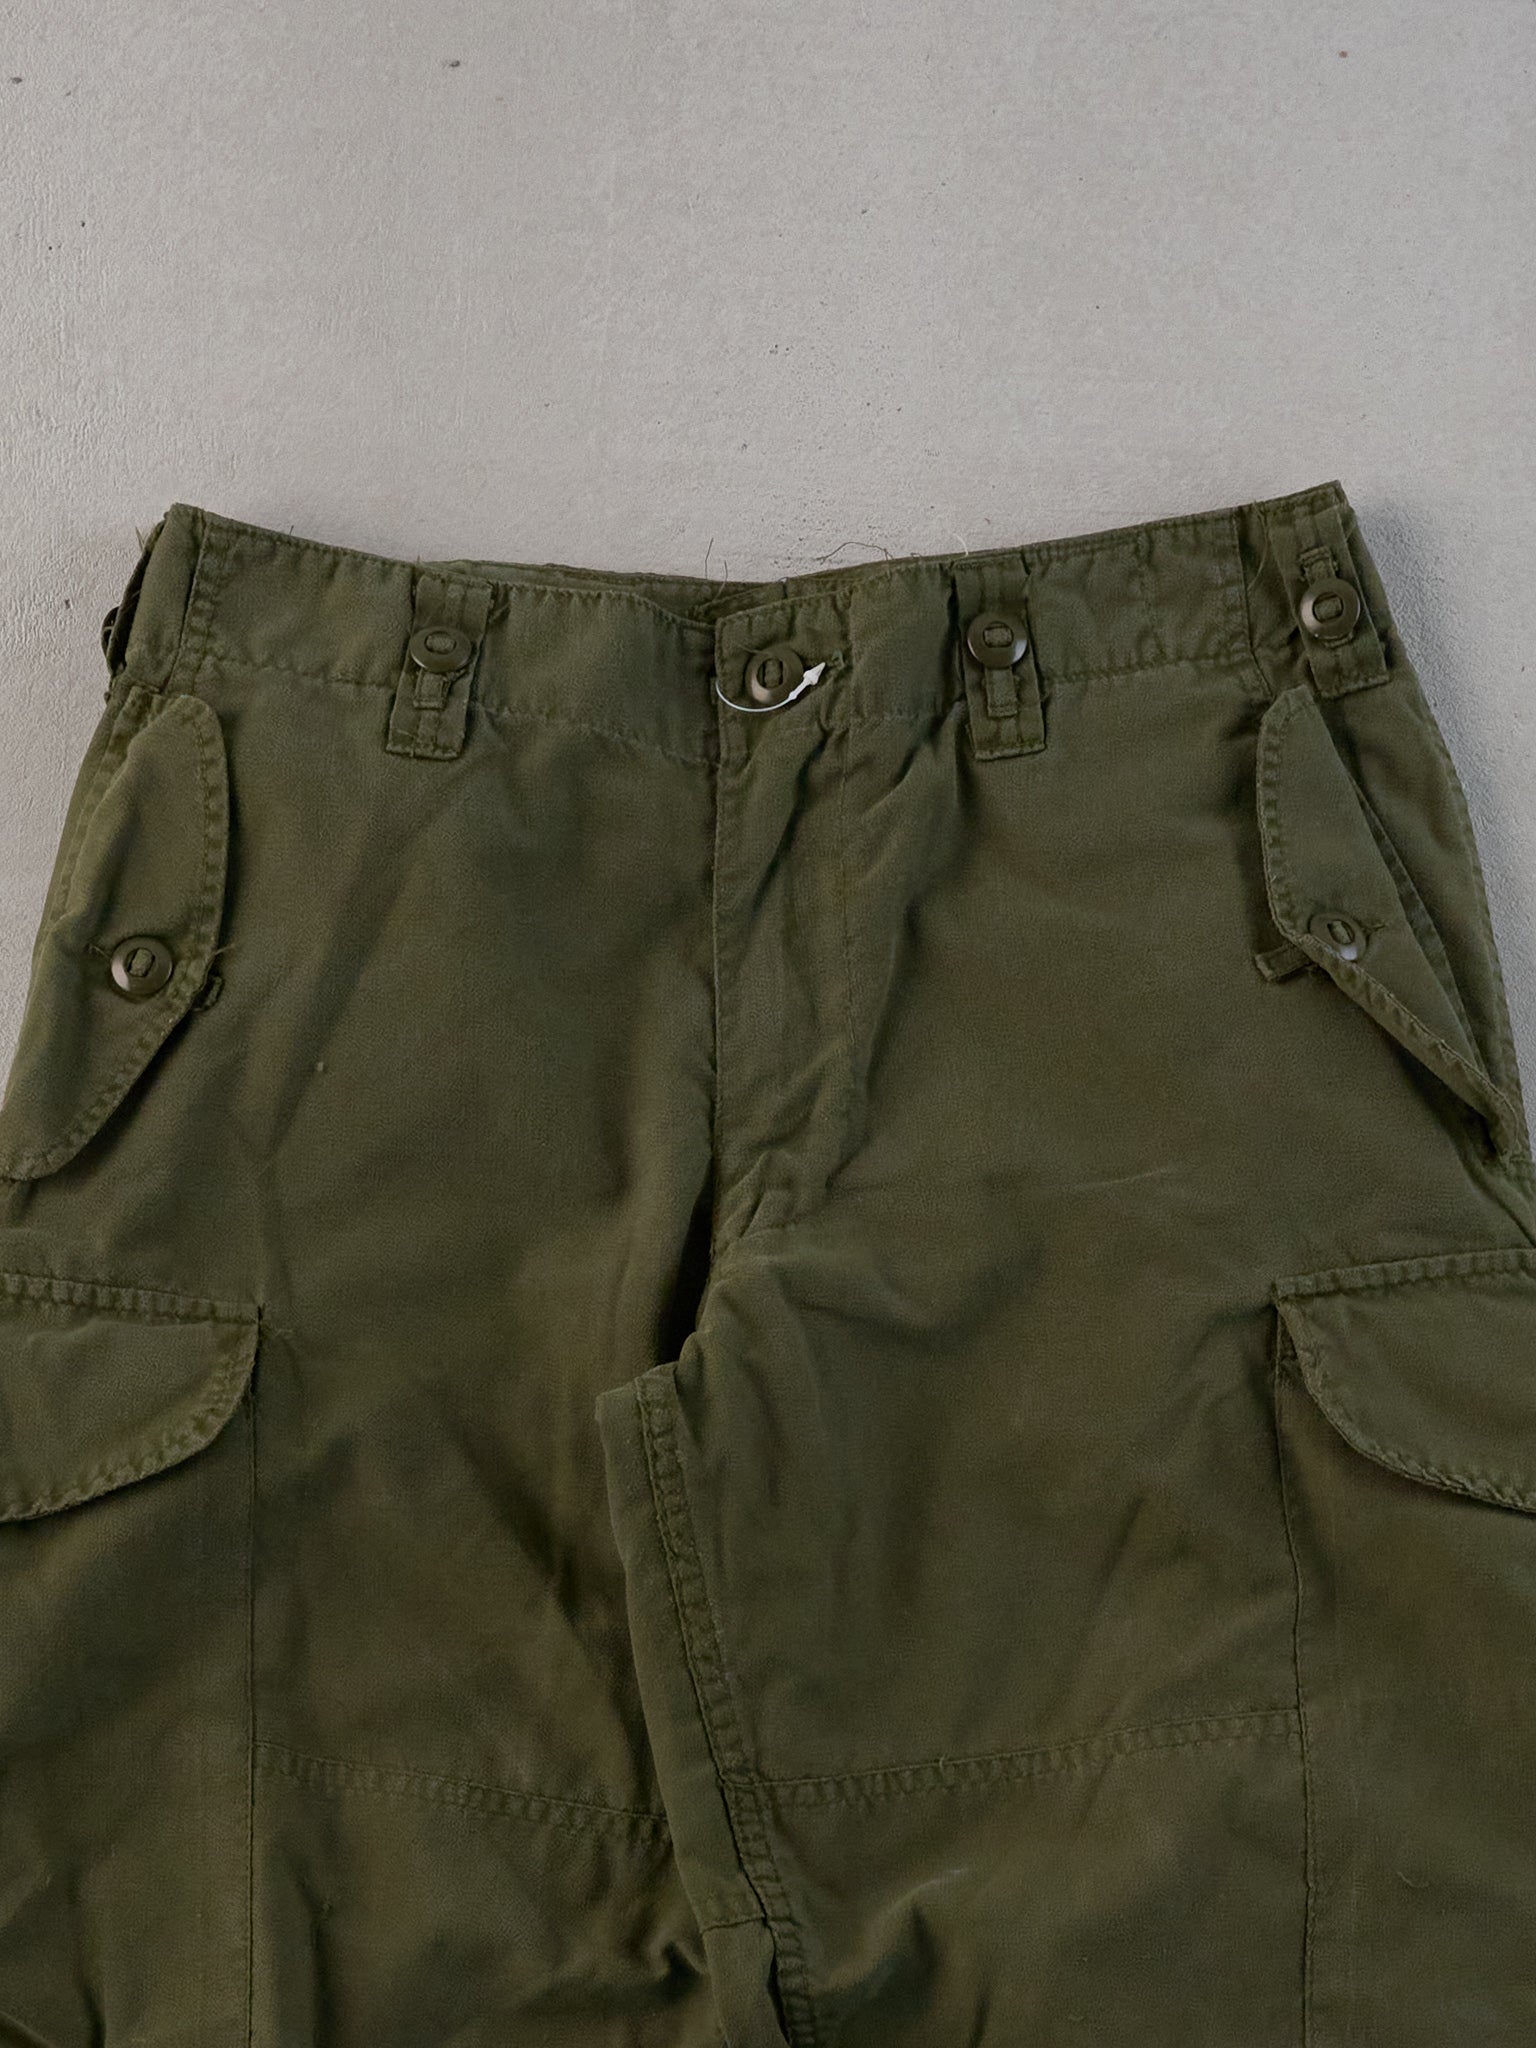 Vintage 90s Green Army Parachute Cargo Pants (30x24)